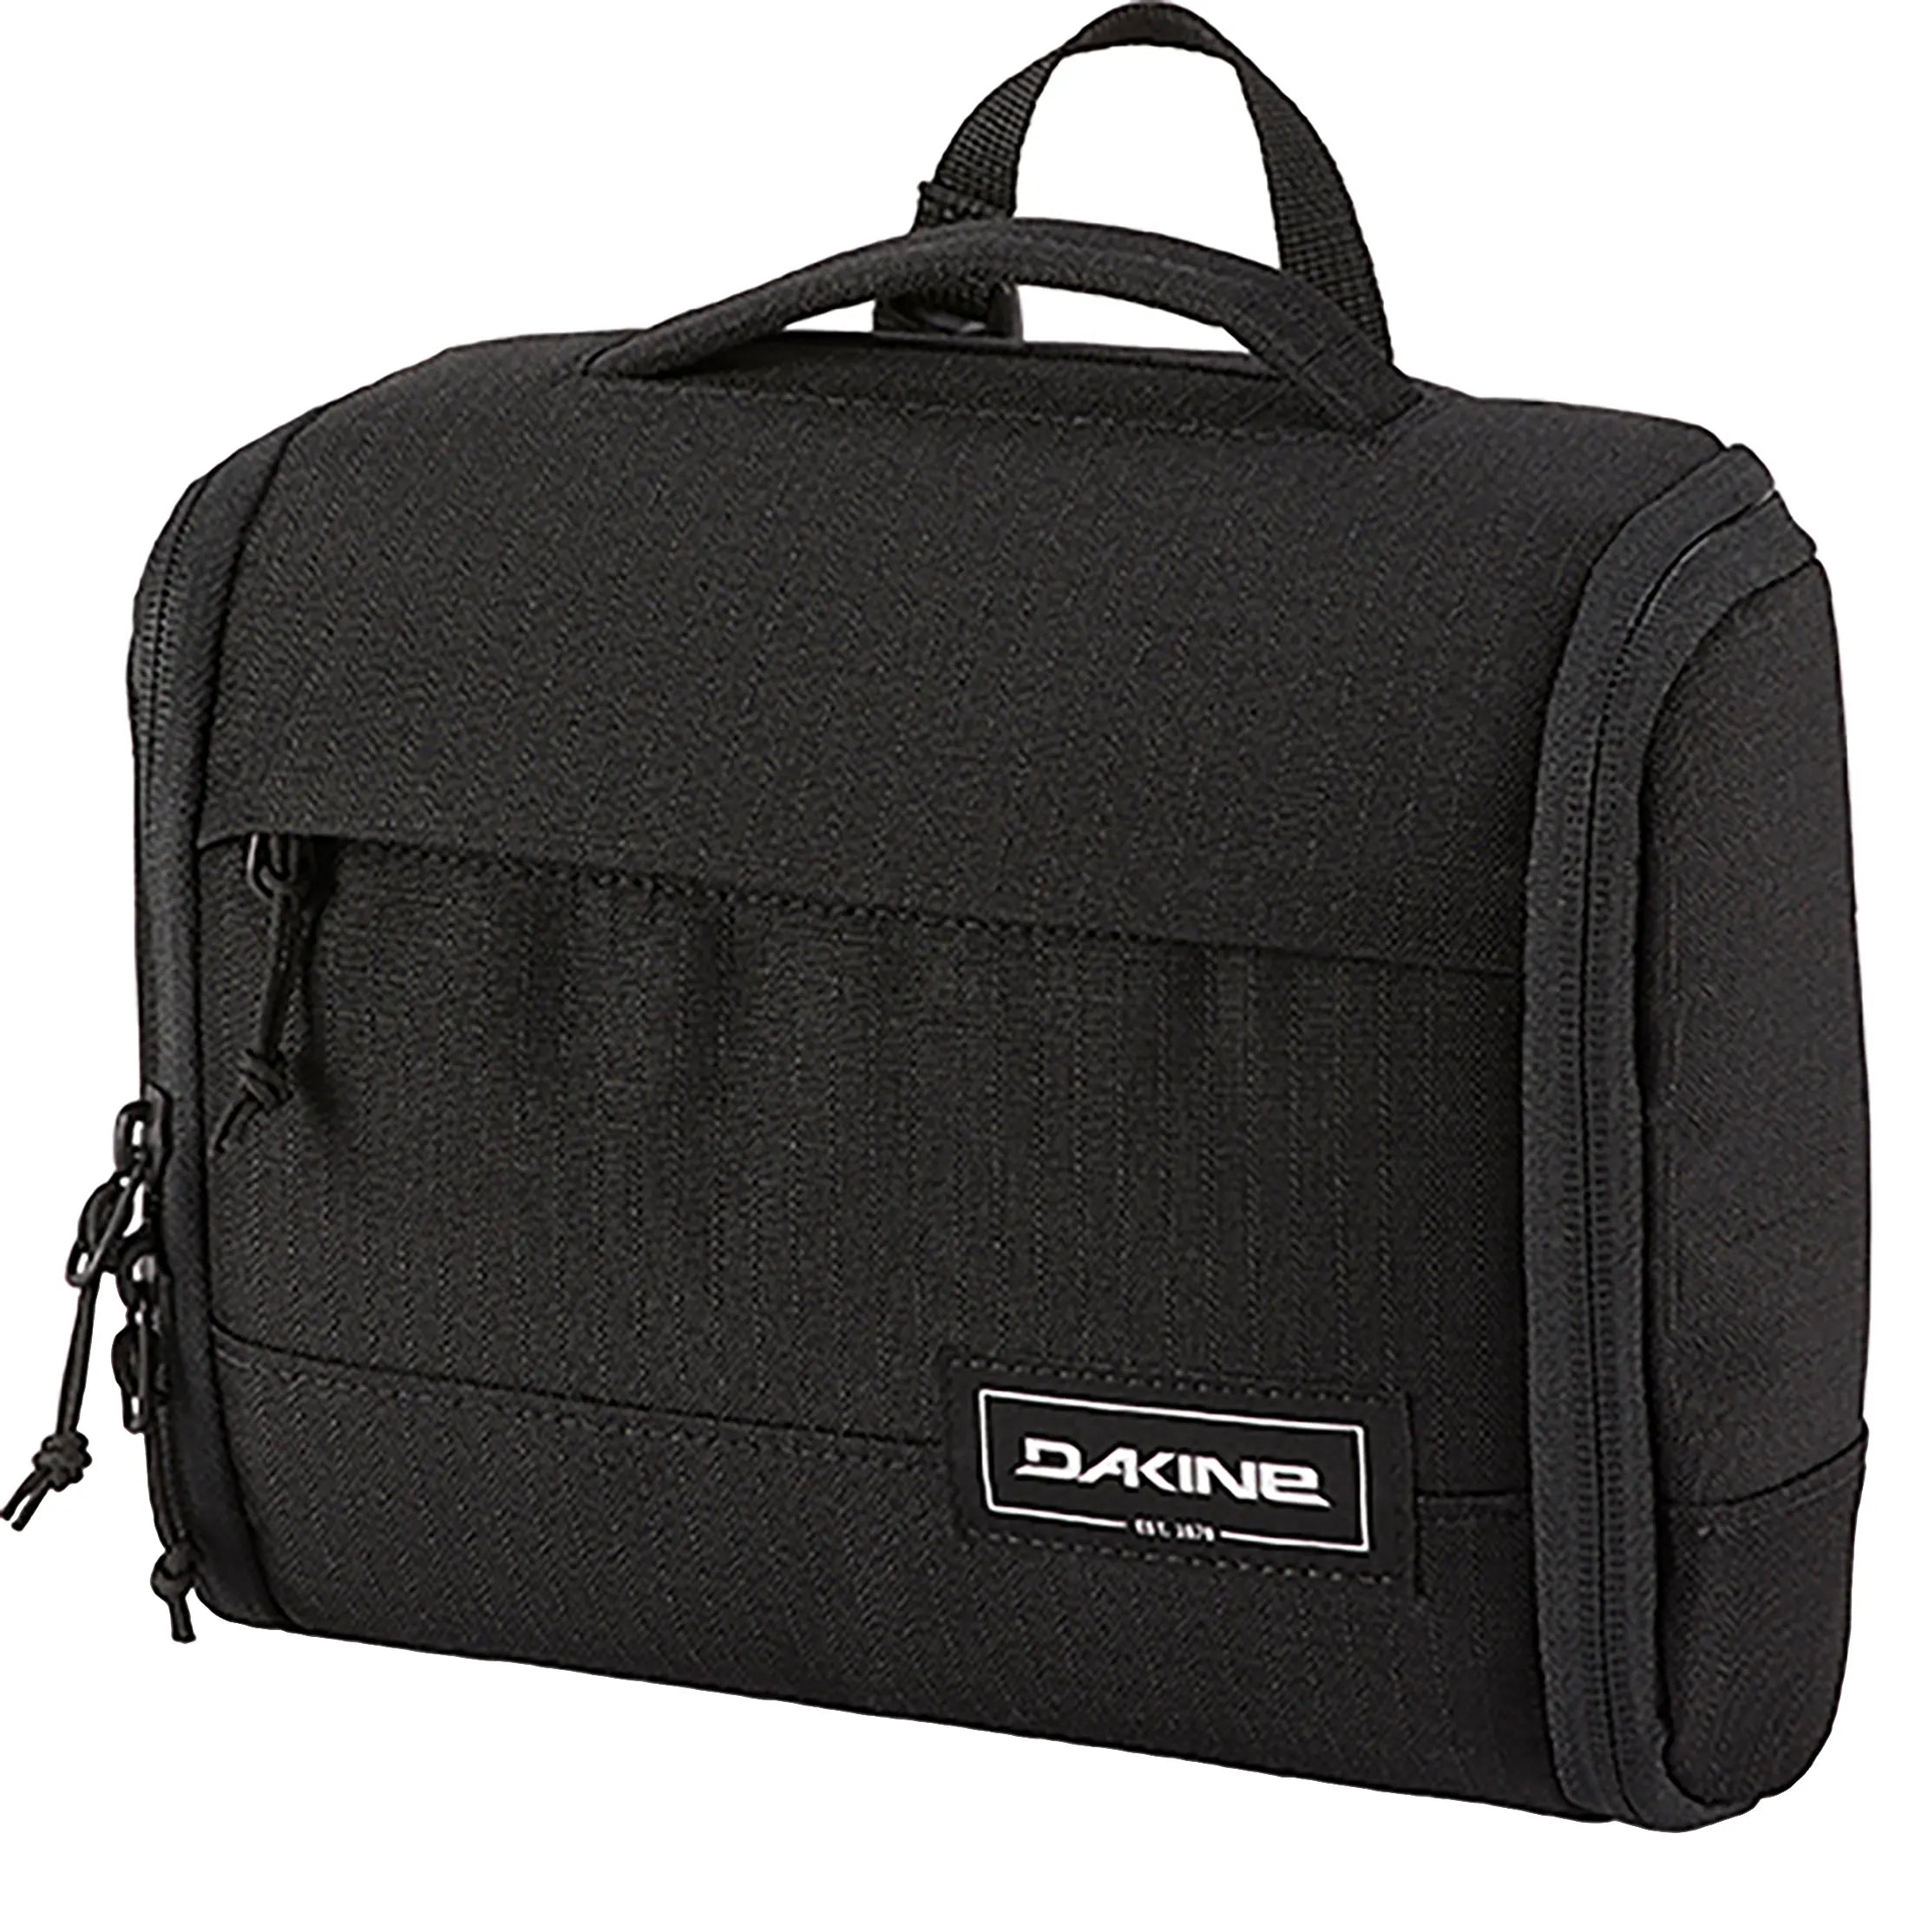 Dakine Packs & Bags Daybreak Travel Kit M 25 cm - black